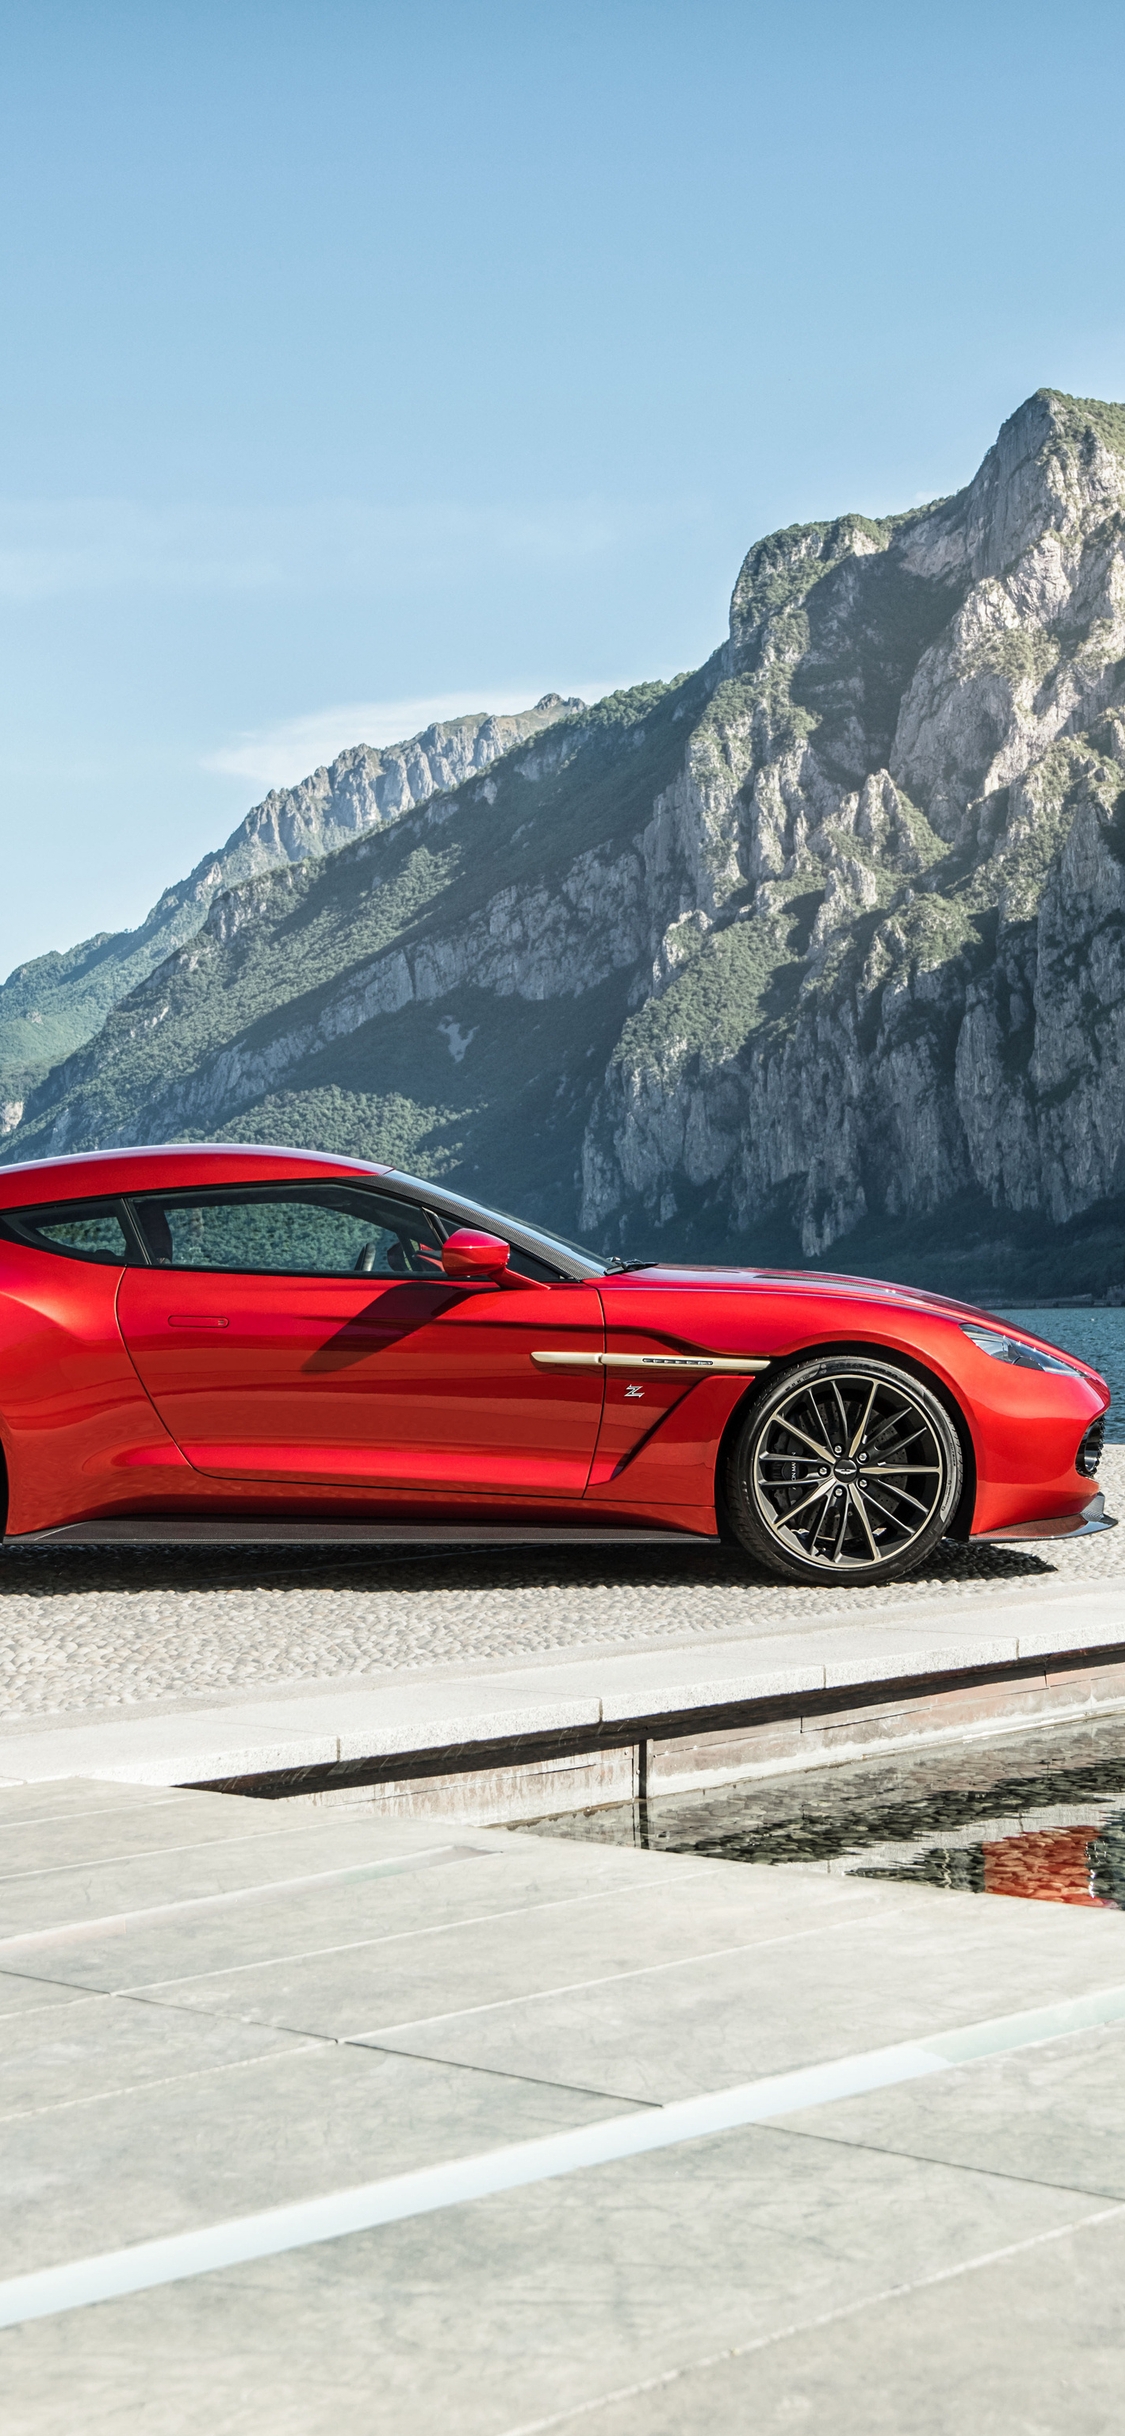 Картинка: Aston Martin, Red, красный, суперкар, небо, горы, озеро, вид сбоку